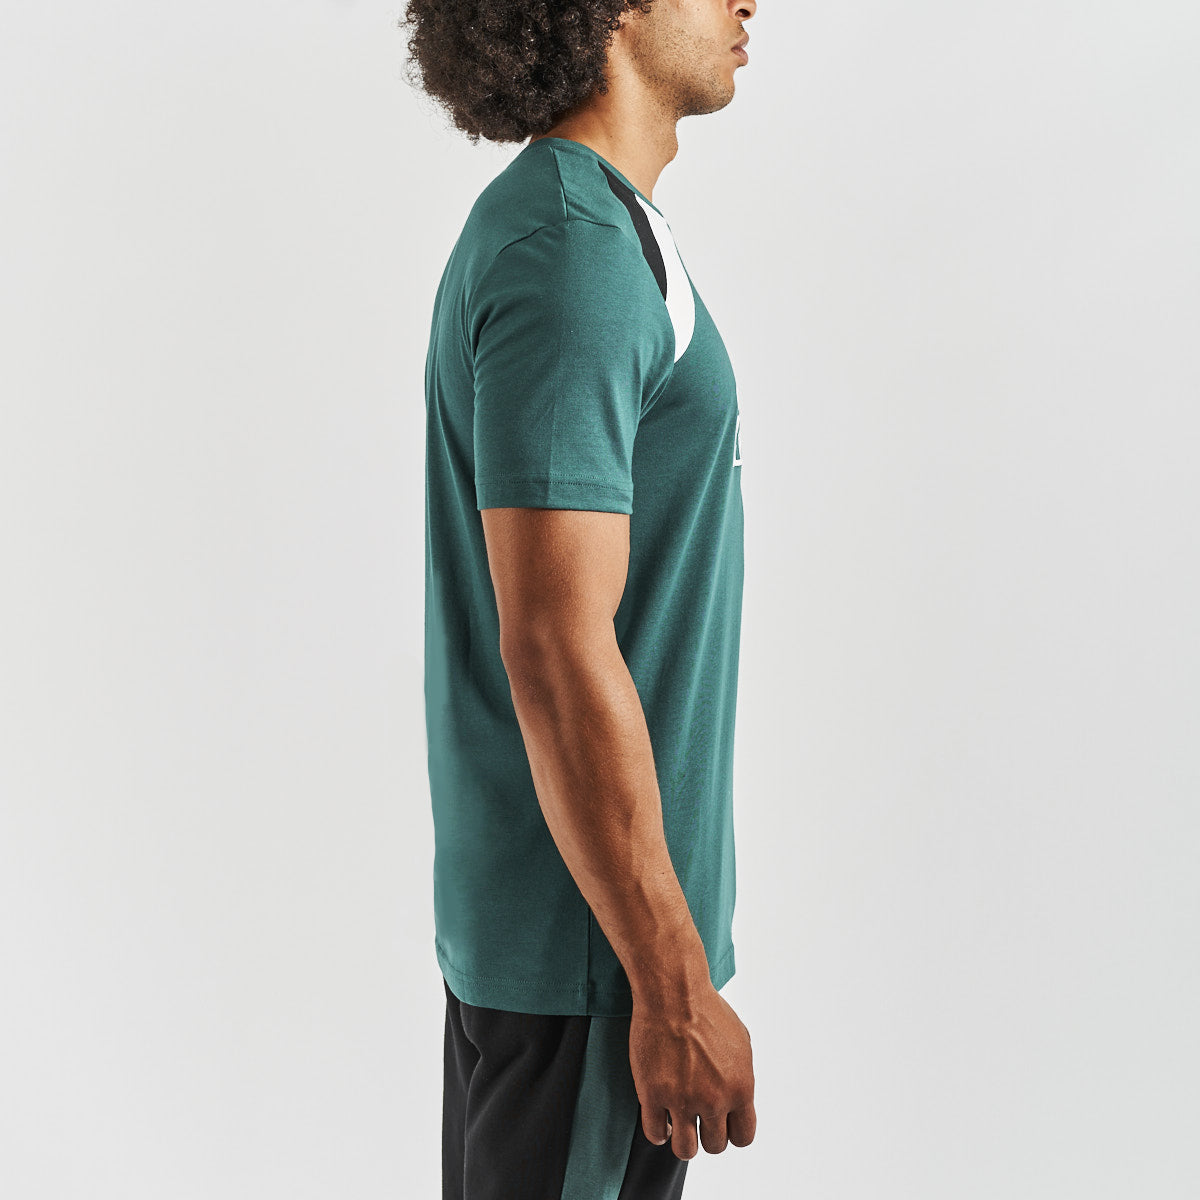 T-shirt Coku Vert homme - image 3